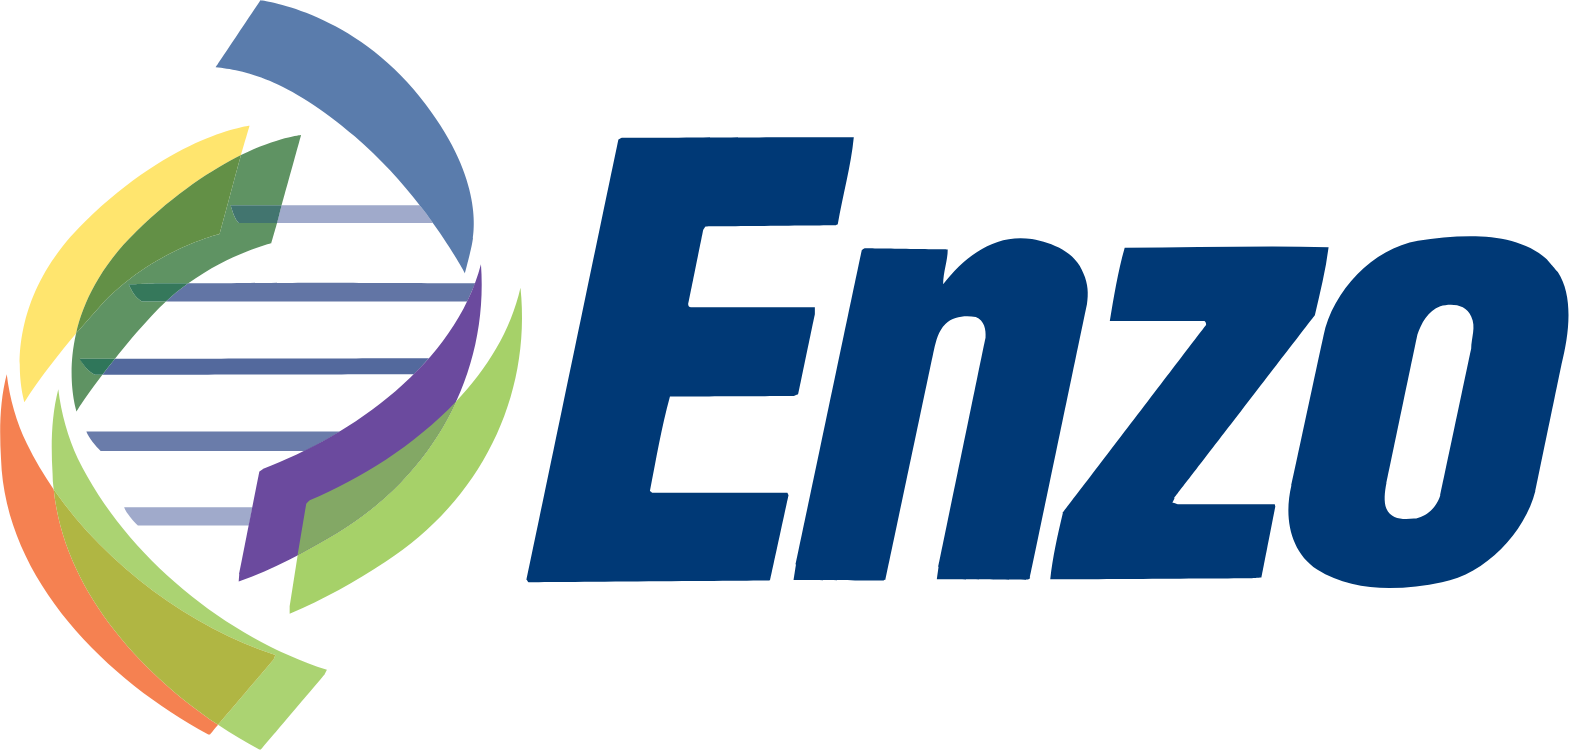 Enzo Biochem logo large (transparent PNG)